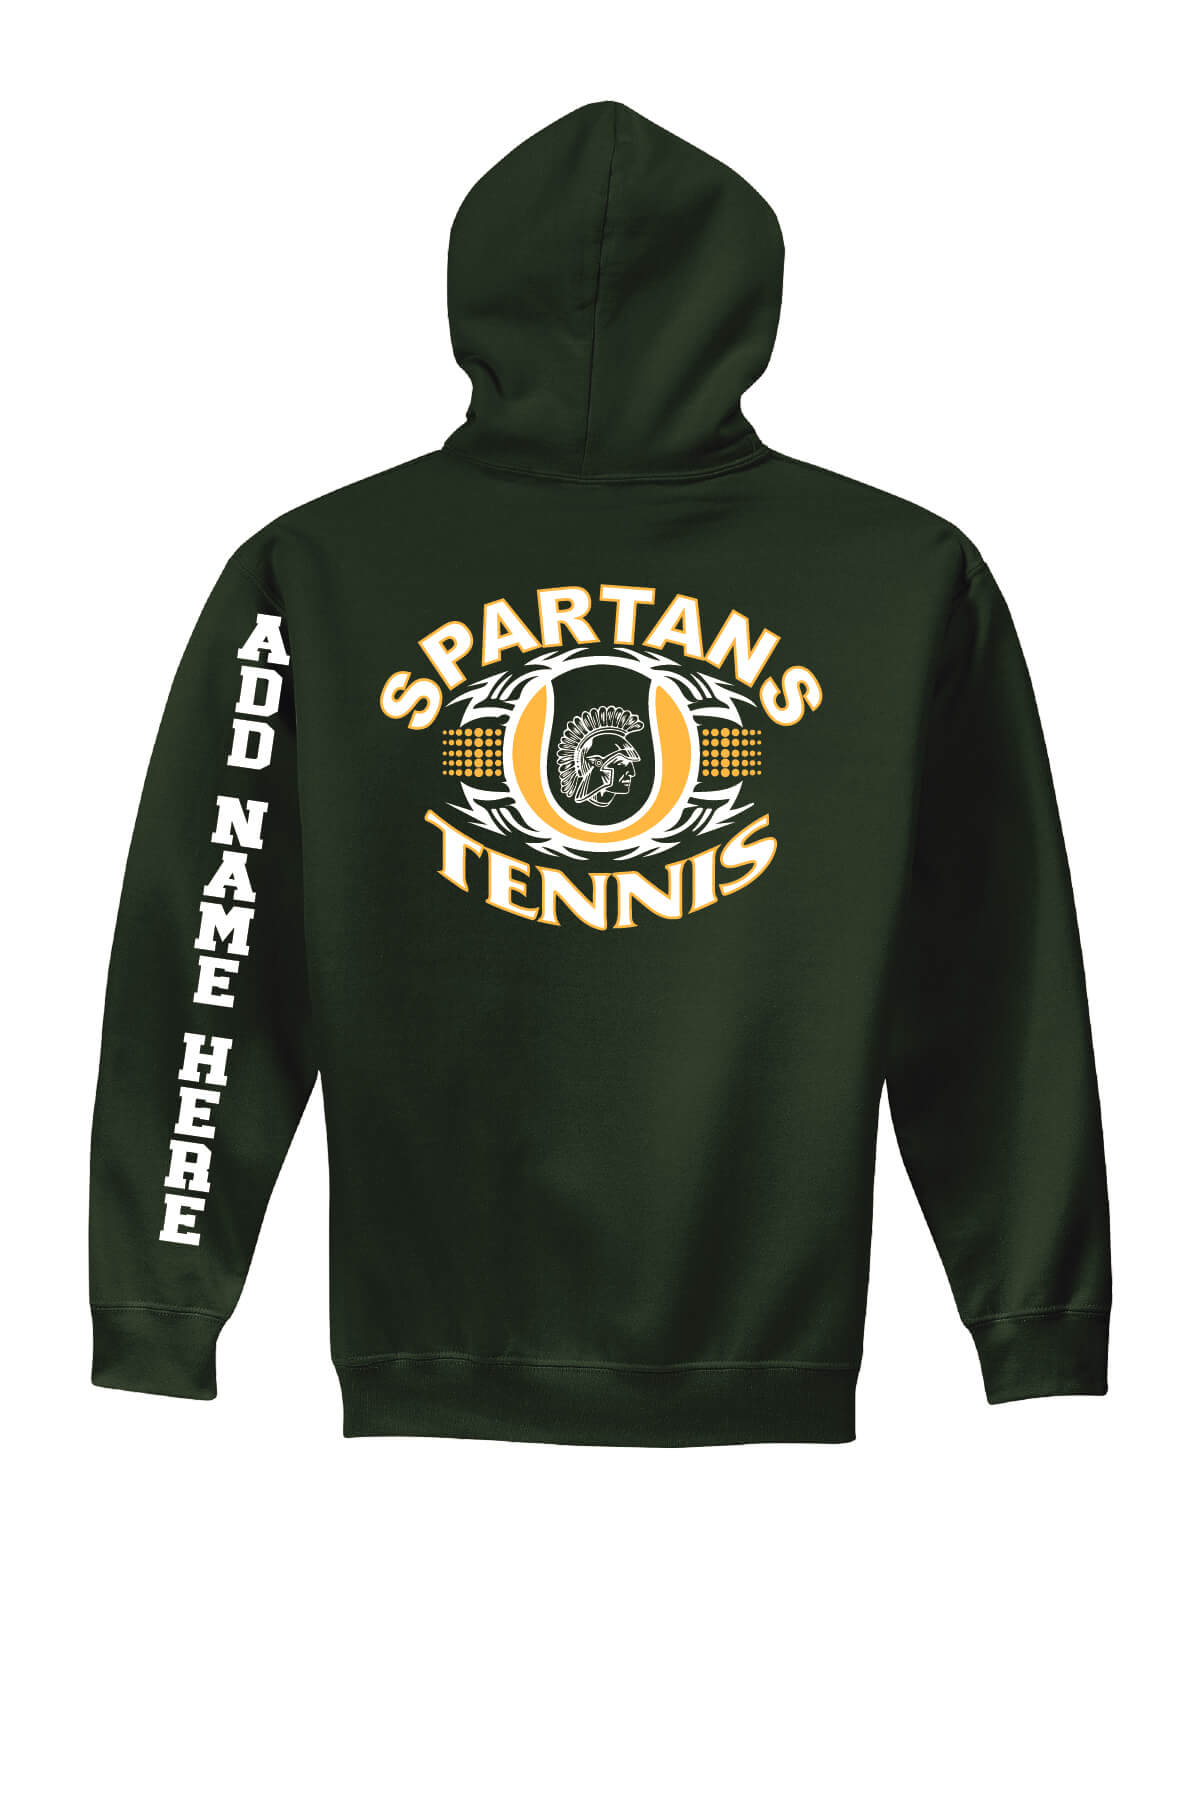 Spartans Tennis Hoodie back-green